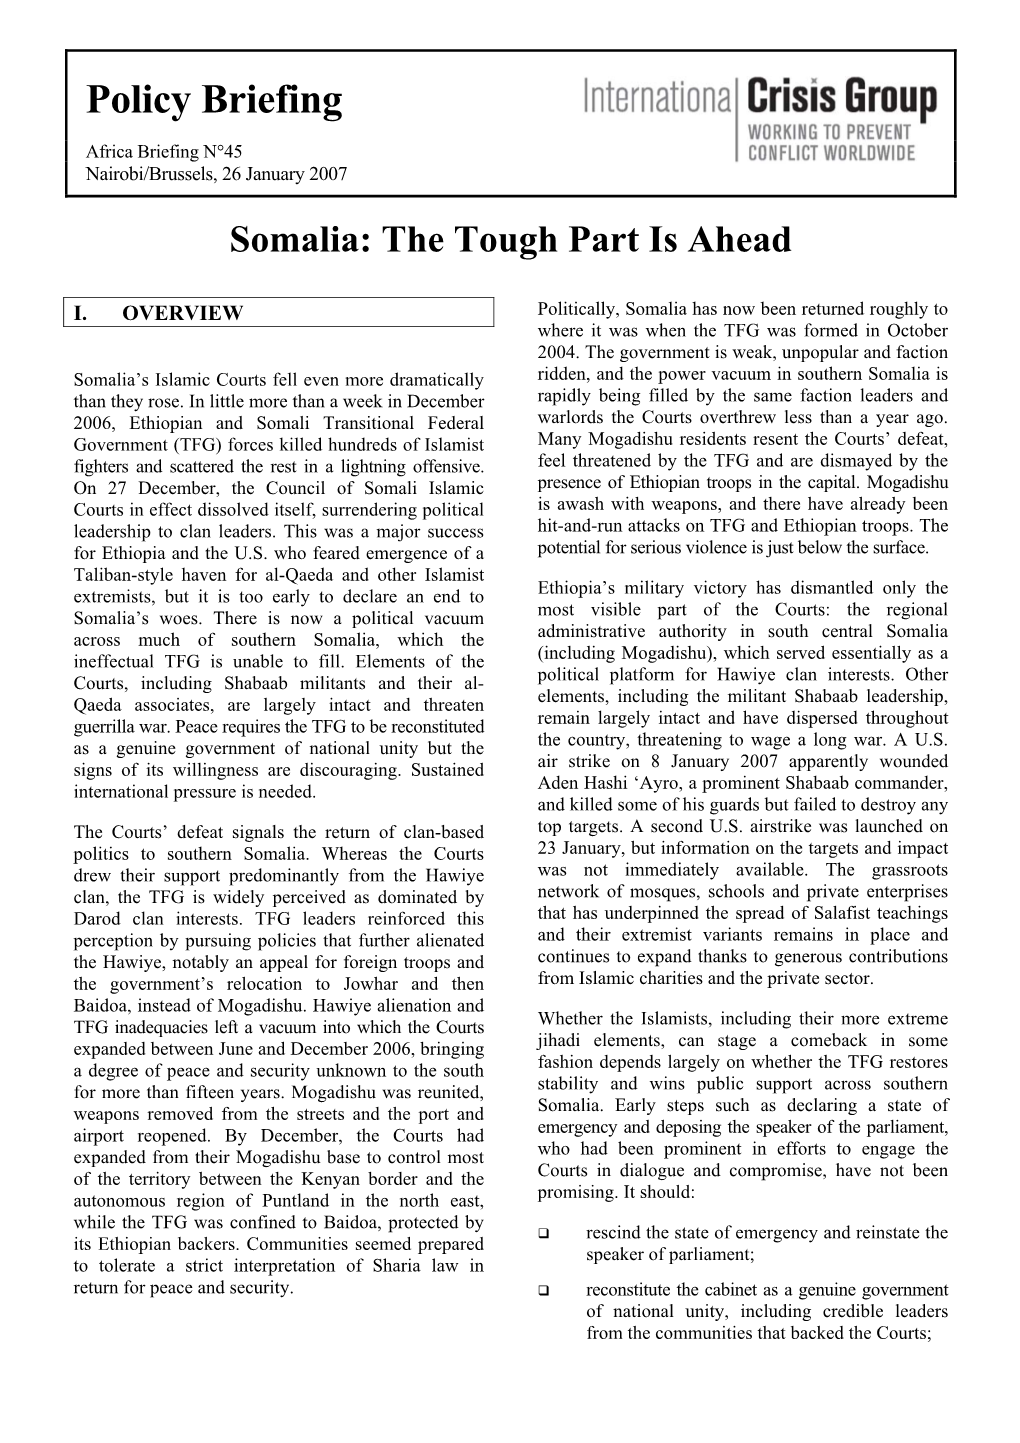 Africa Briefing, Nr. 45: Somalia